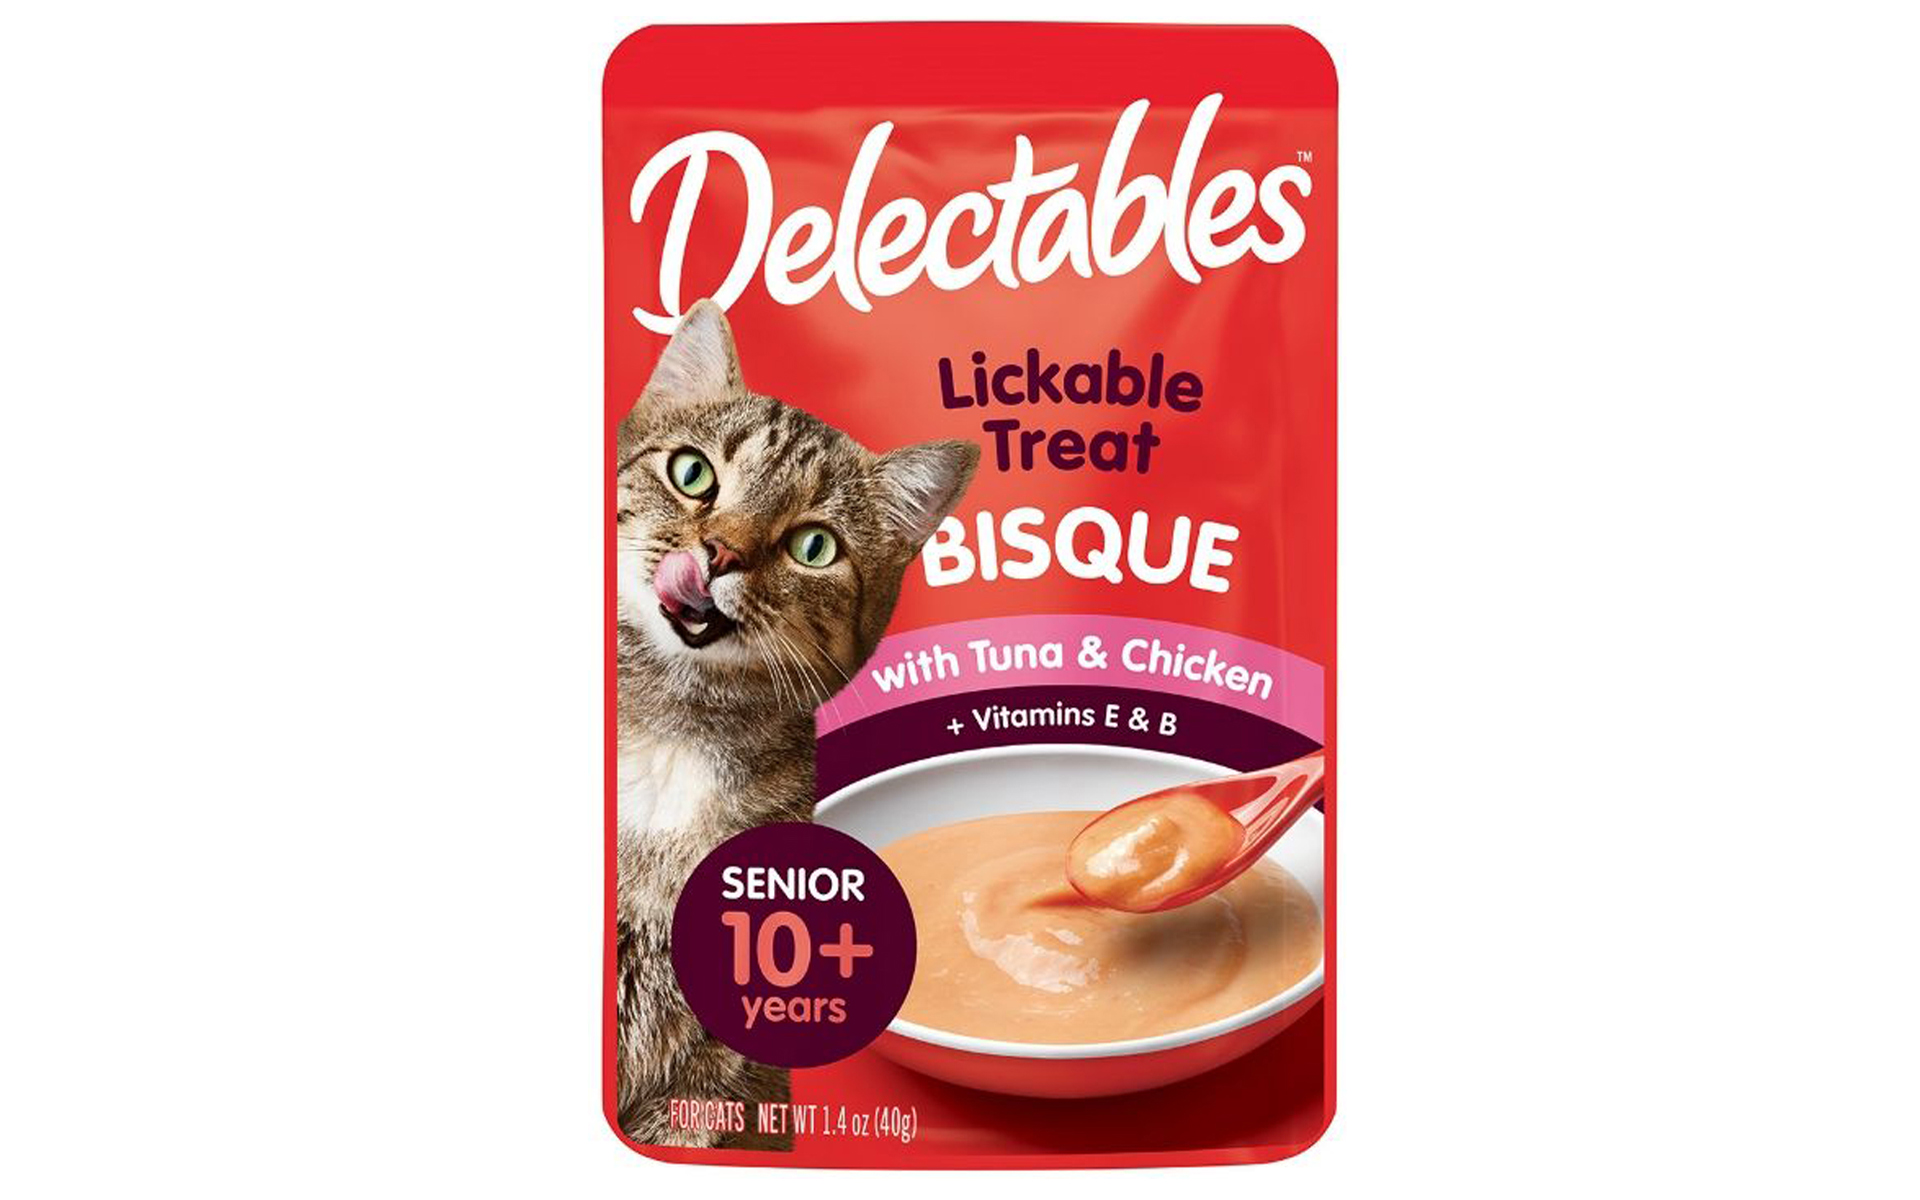 Delectables Bisque Sr. Lickable Cat Treats - Tuna & Chicken